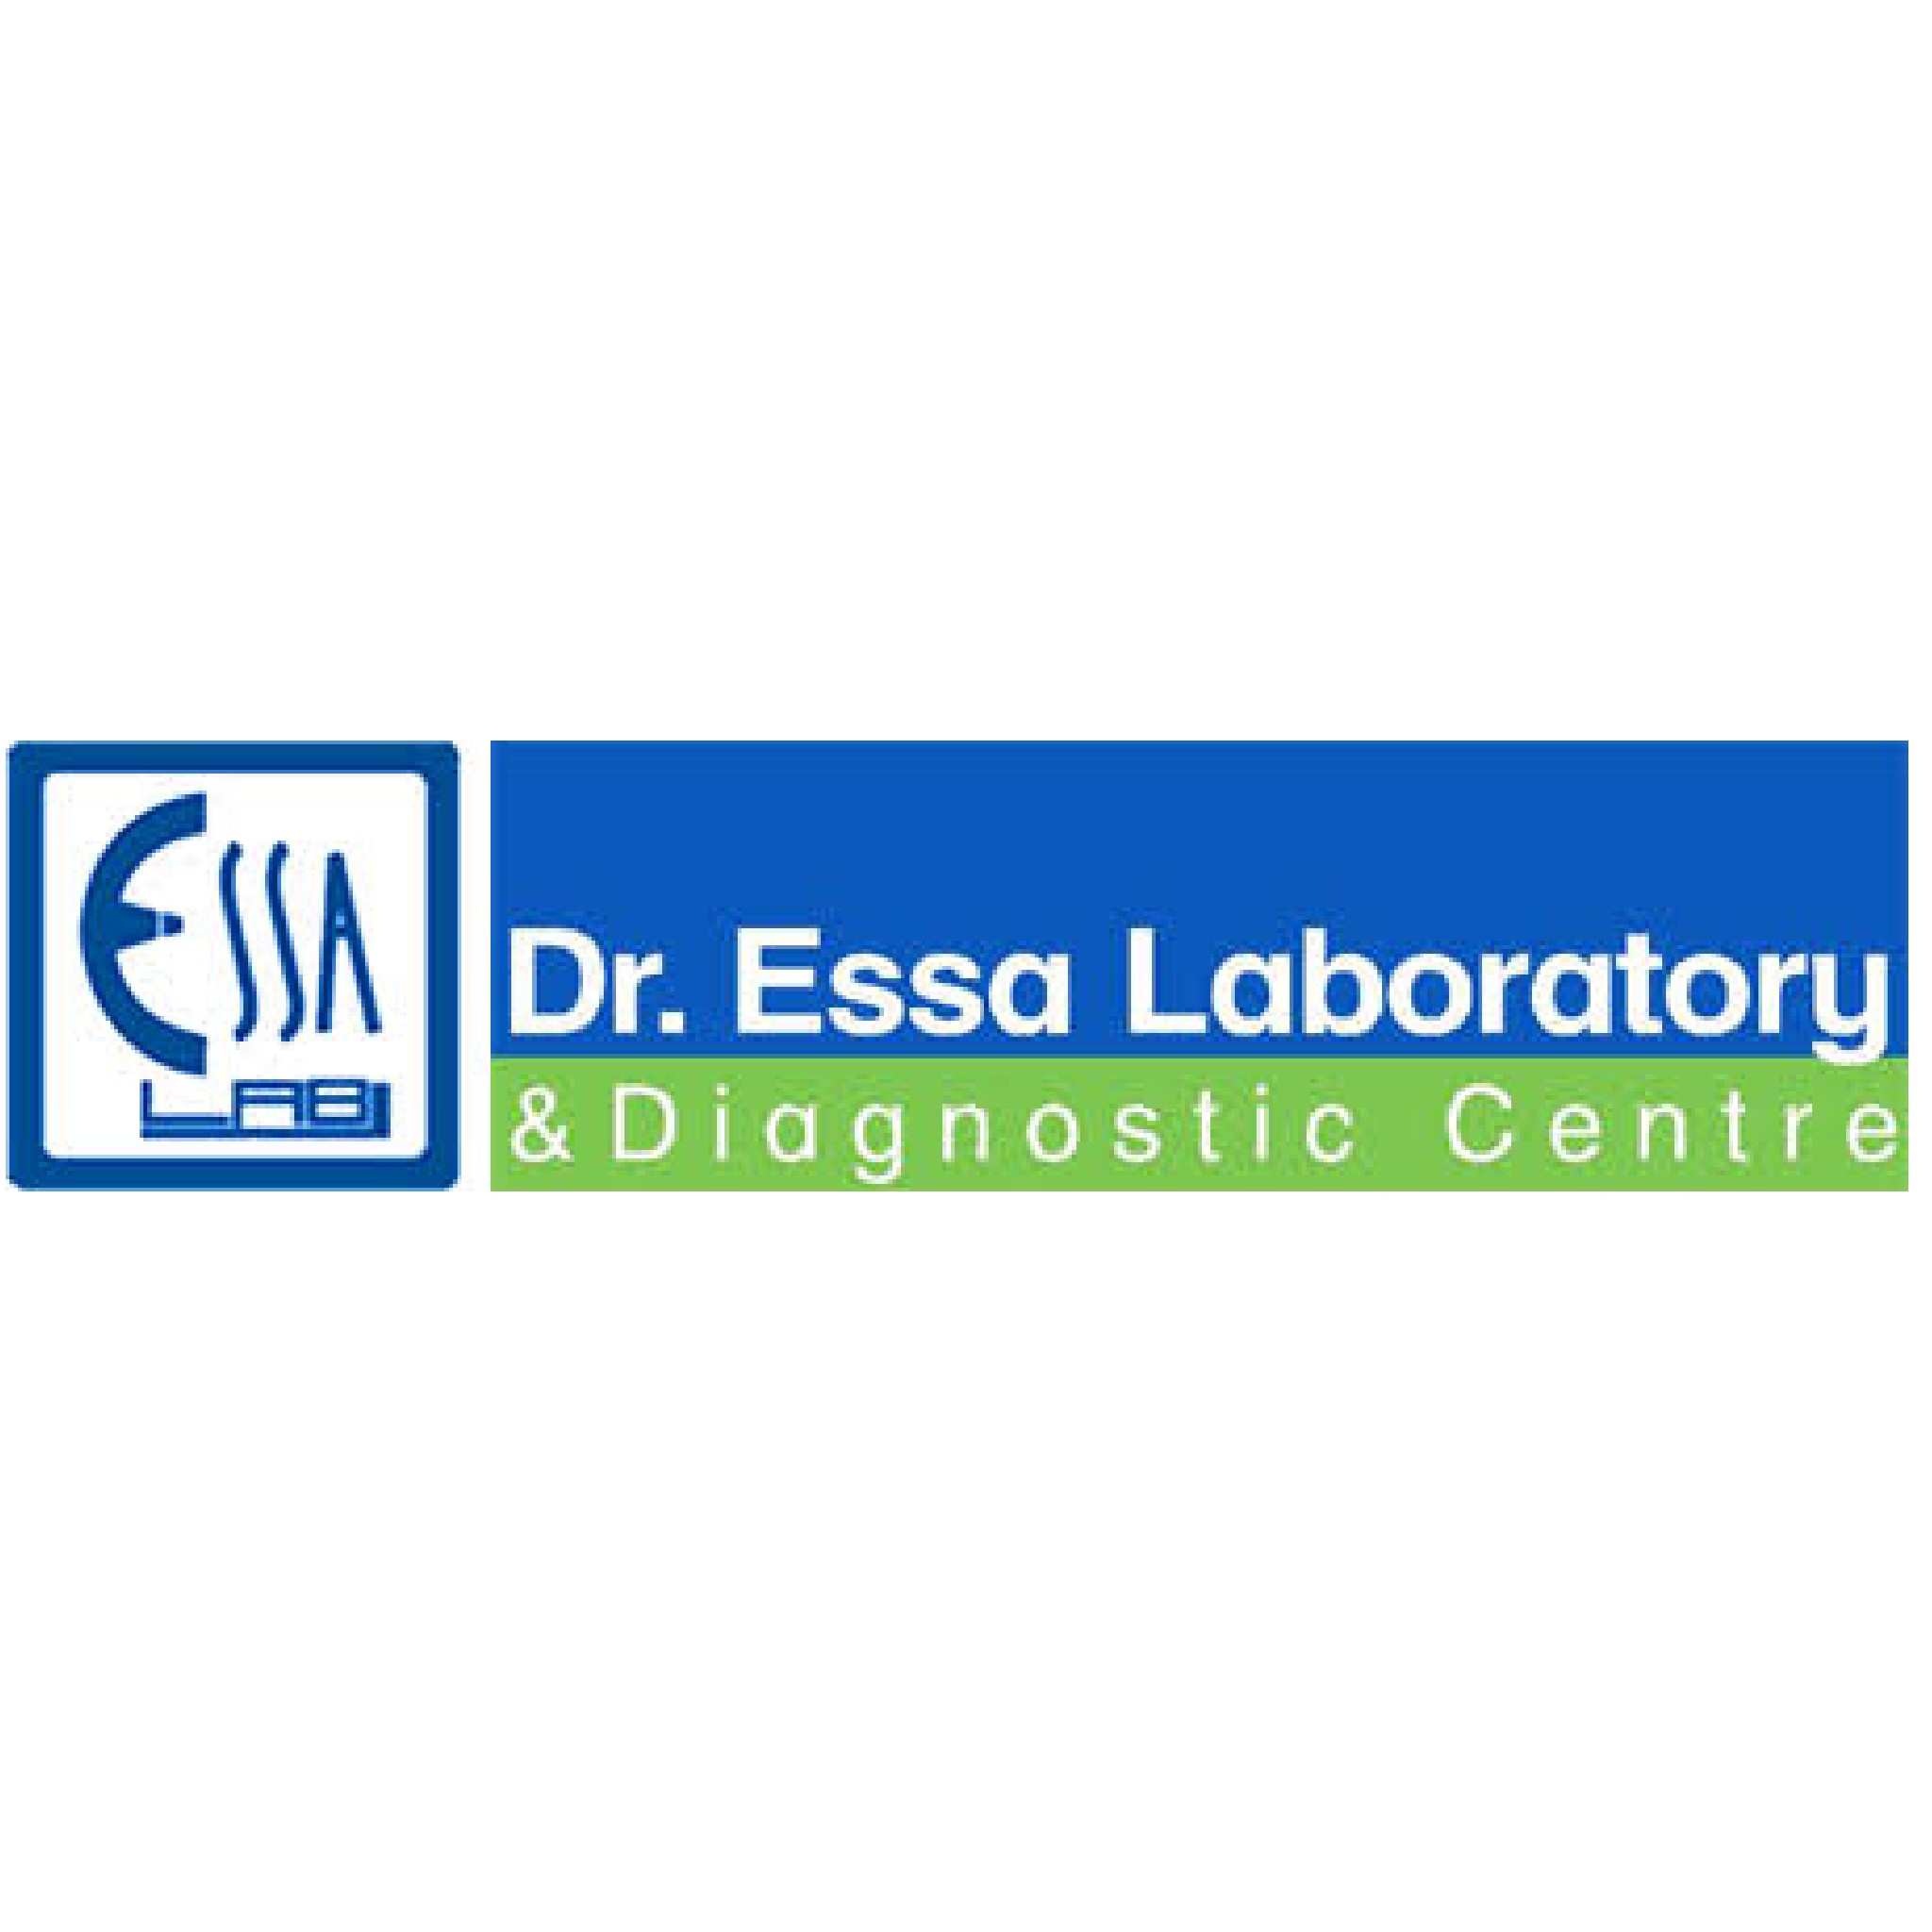 Dr. Essa’s Laboratory  & Diagnostic Center  image